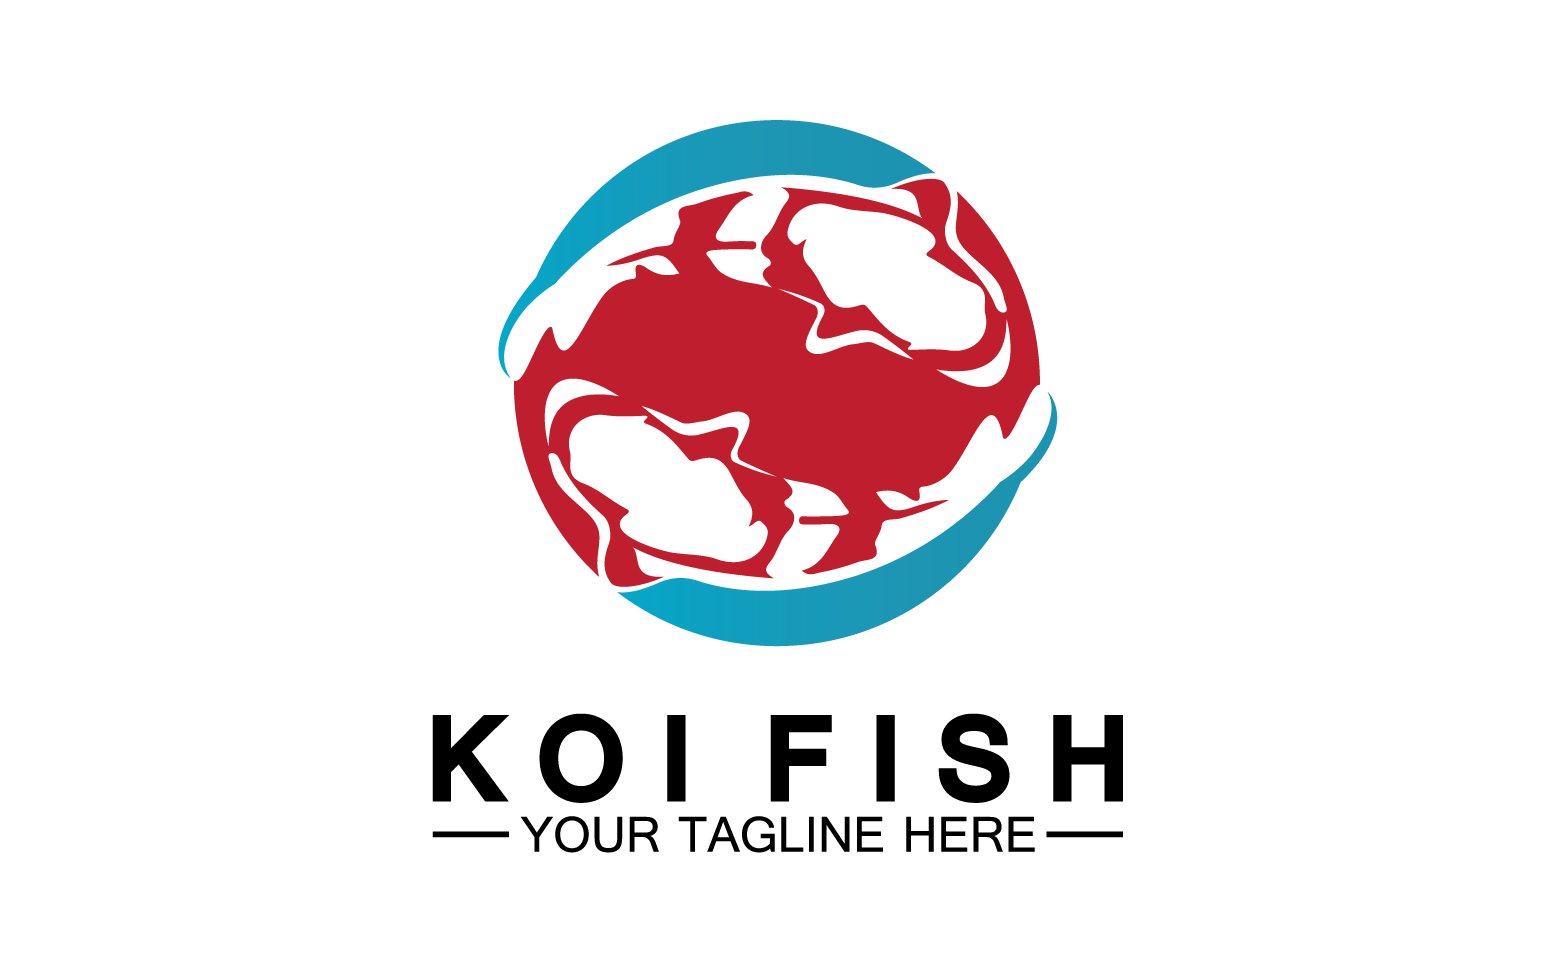 Fish koi black and red icon logo vector v30